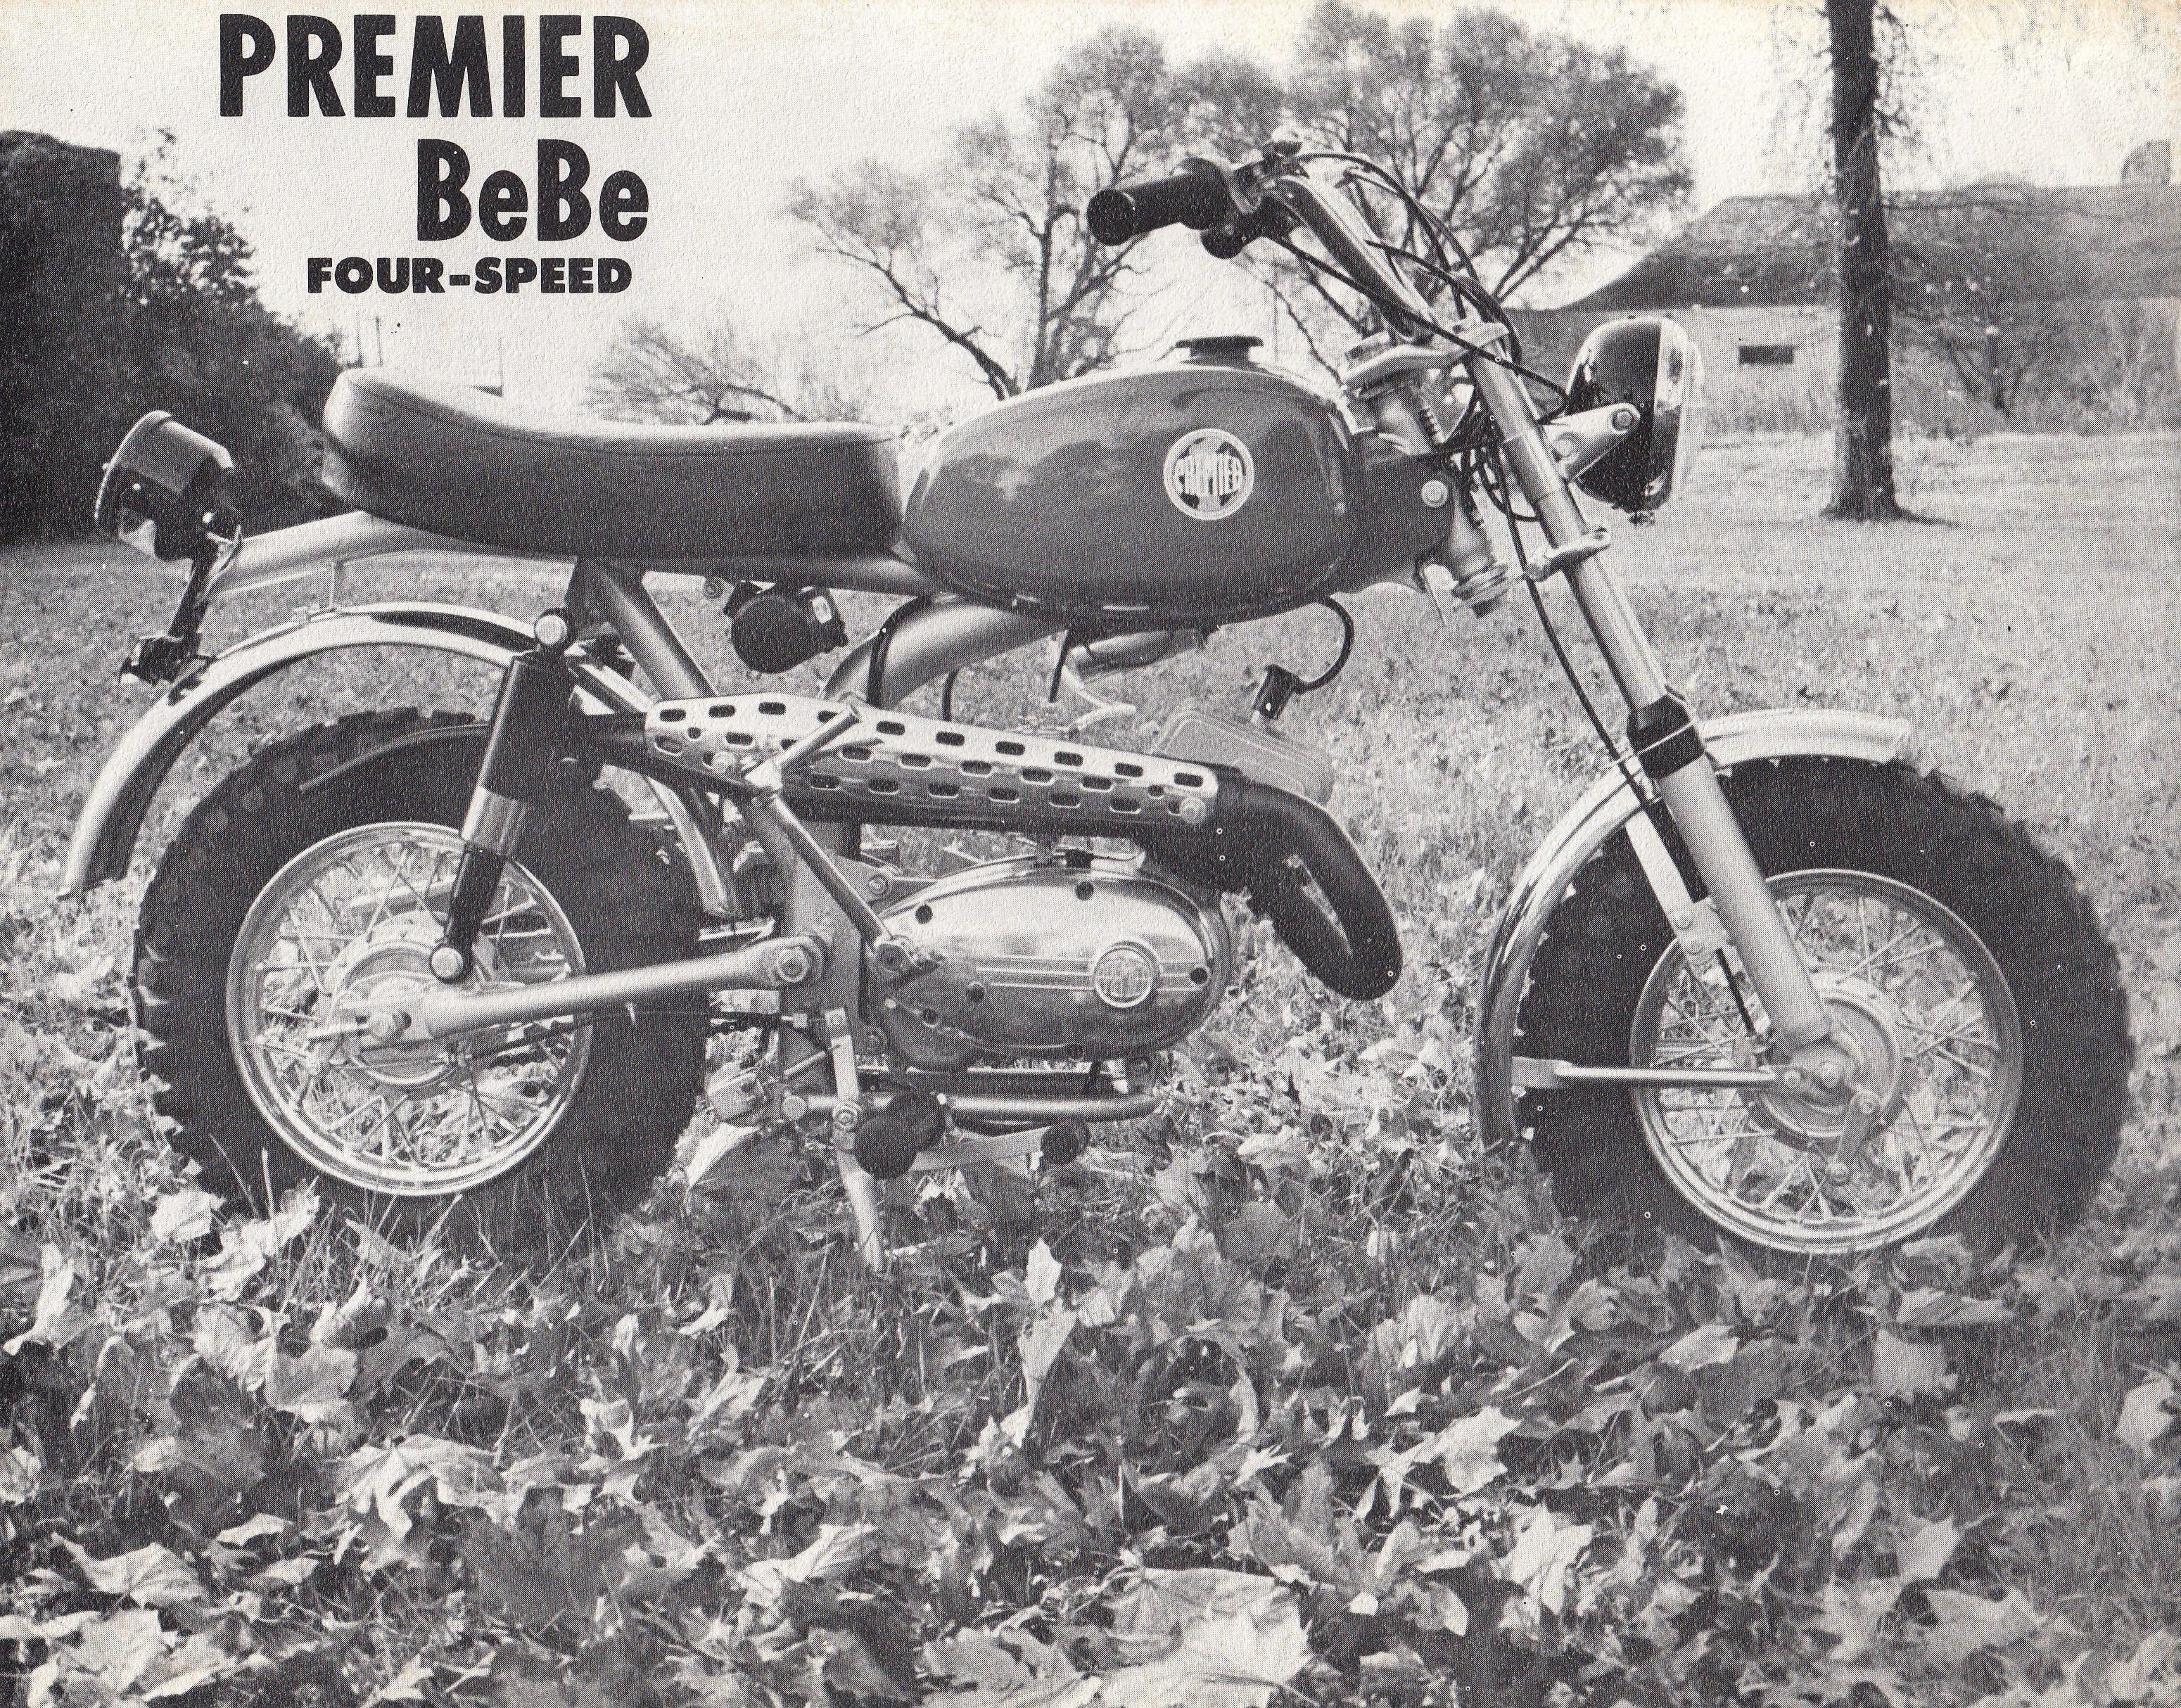 Brochure - Premier Be Be four-speed mini bike